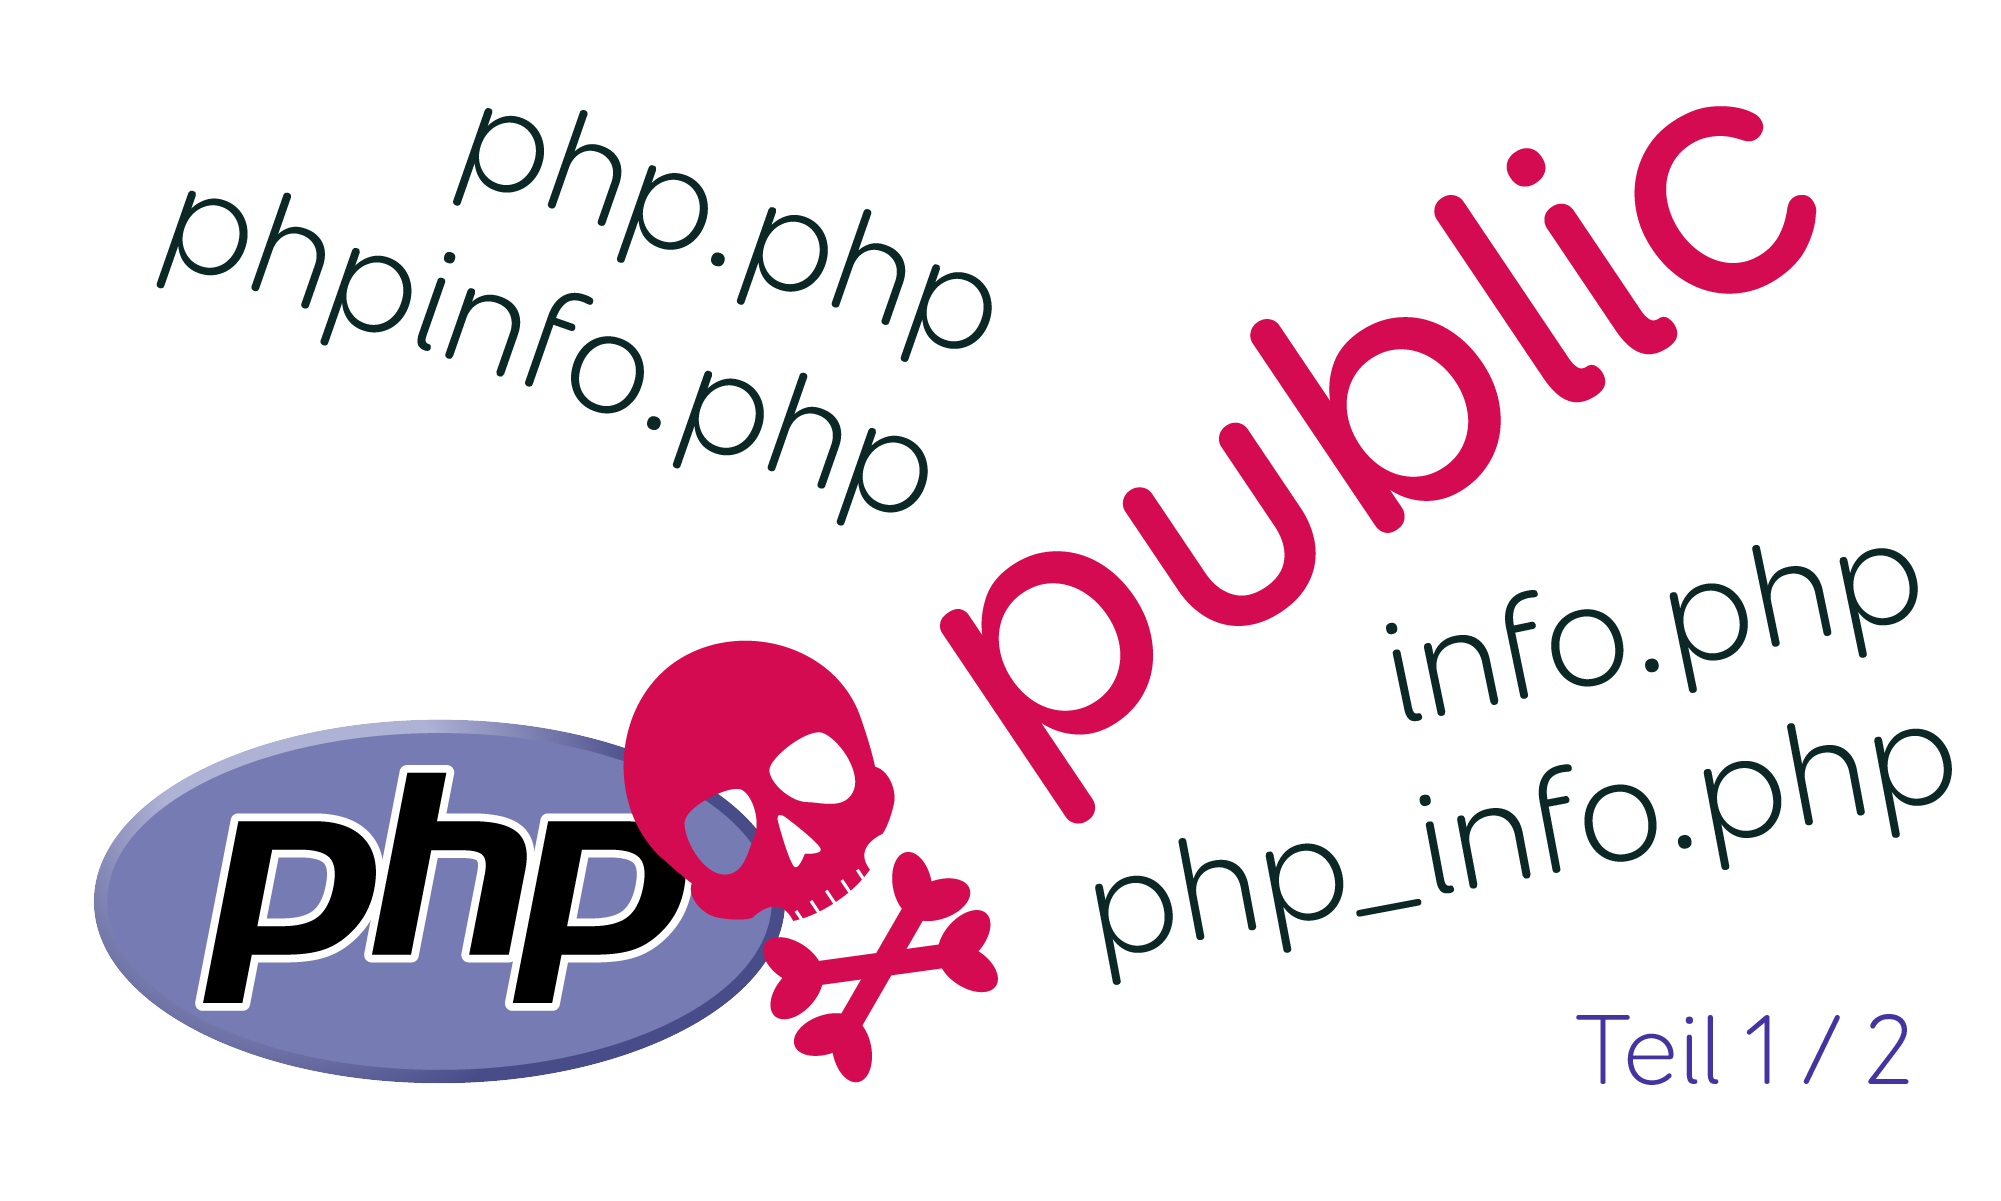 Public php info